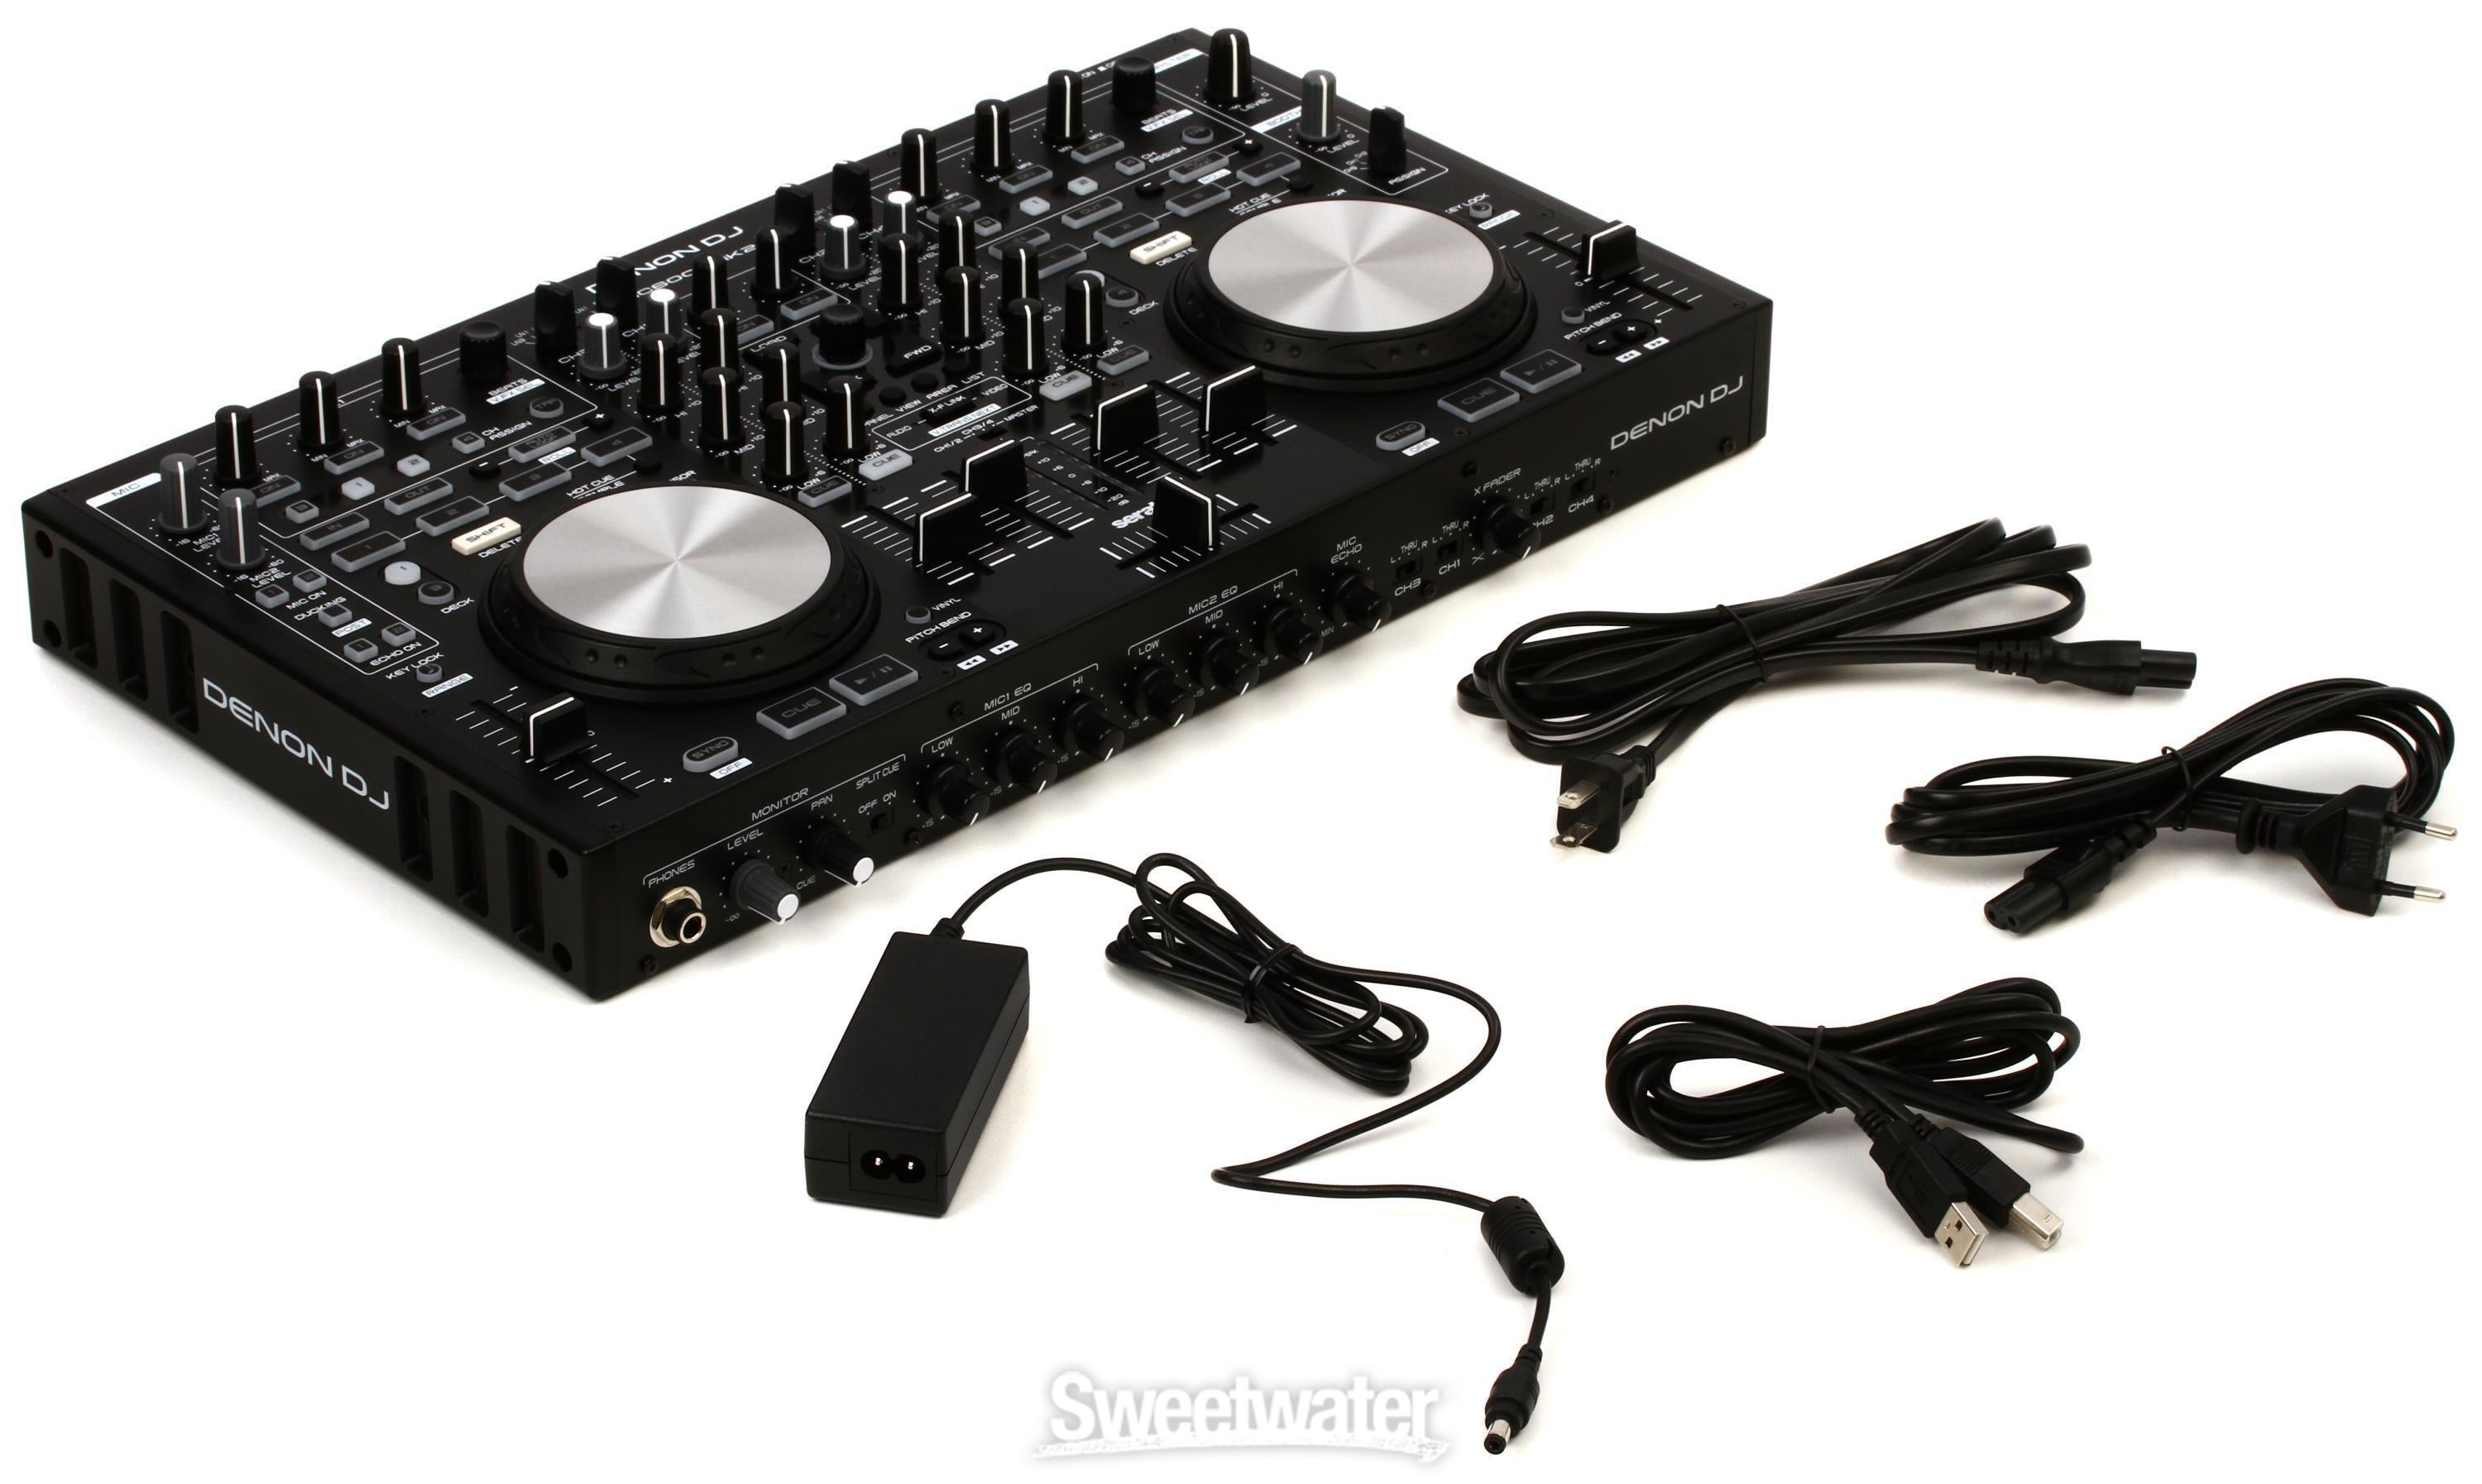 Denon DJ MC6000MK2 DVS ready DJ Controller for Serato | Sweetwater